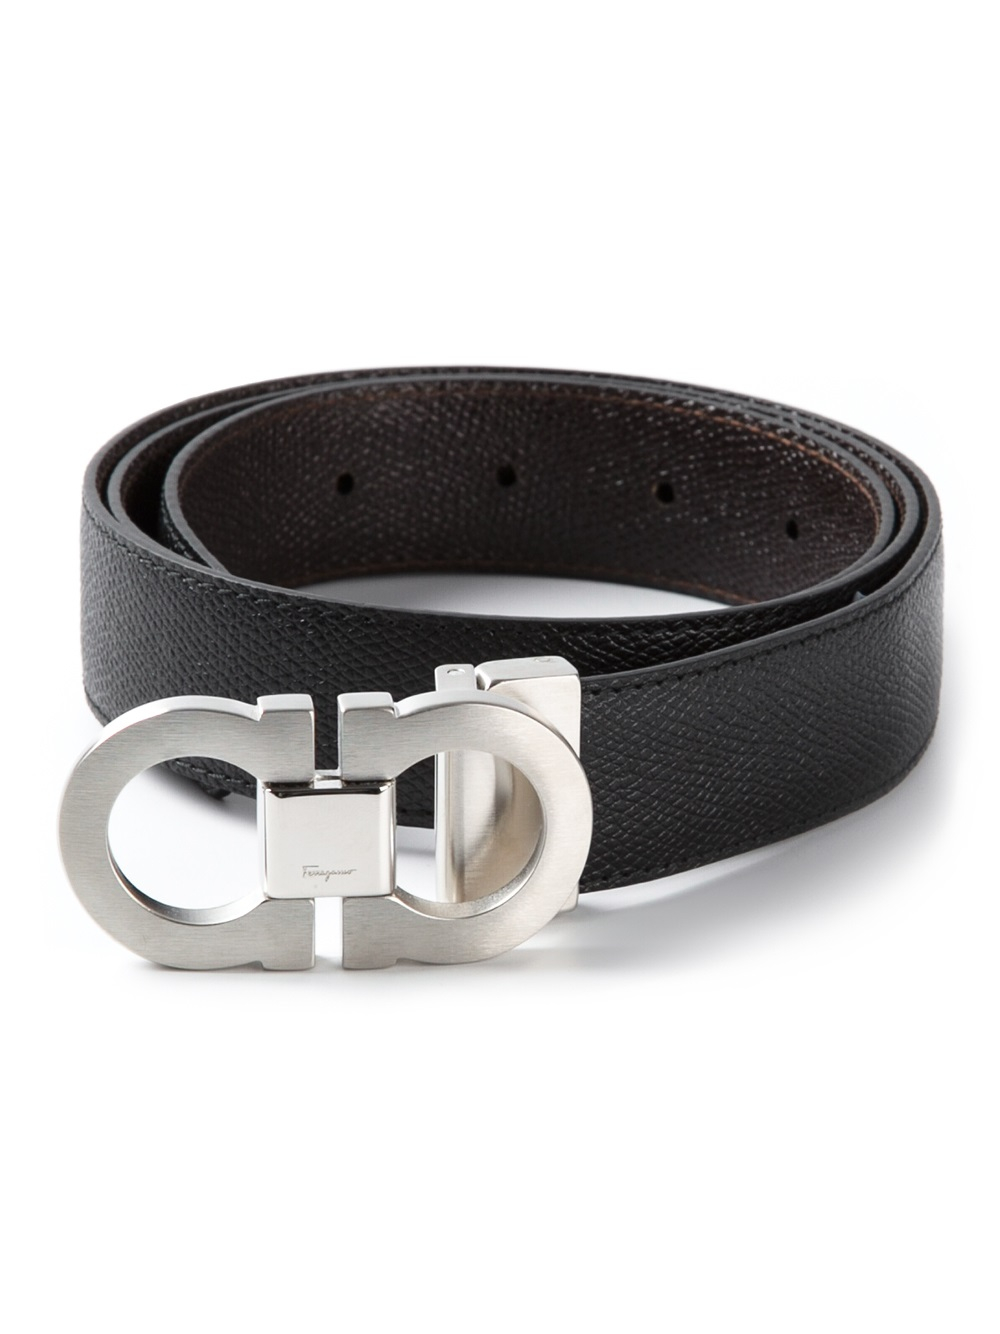 Lyst - Ferragamo Grainy Belt in Black for Men